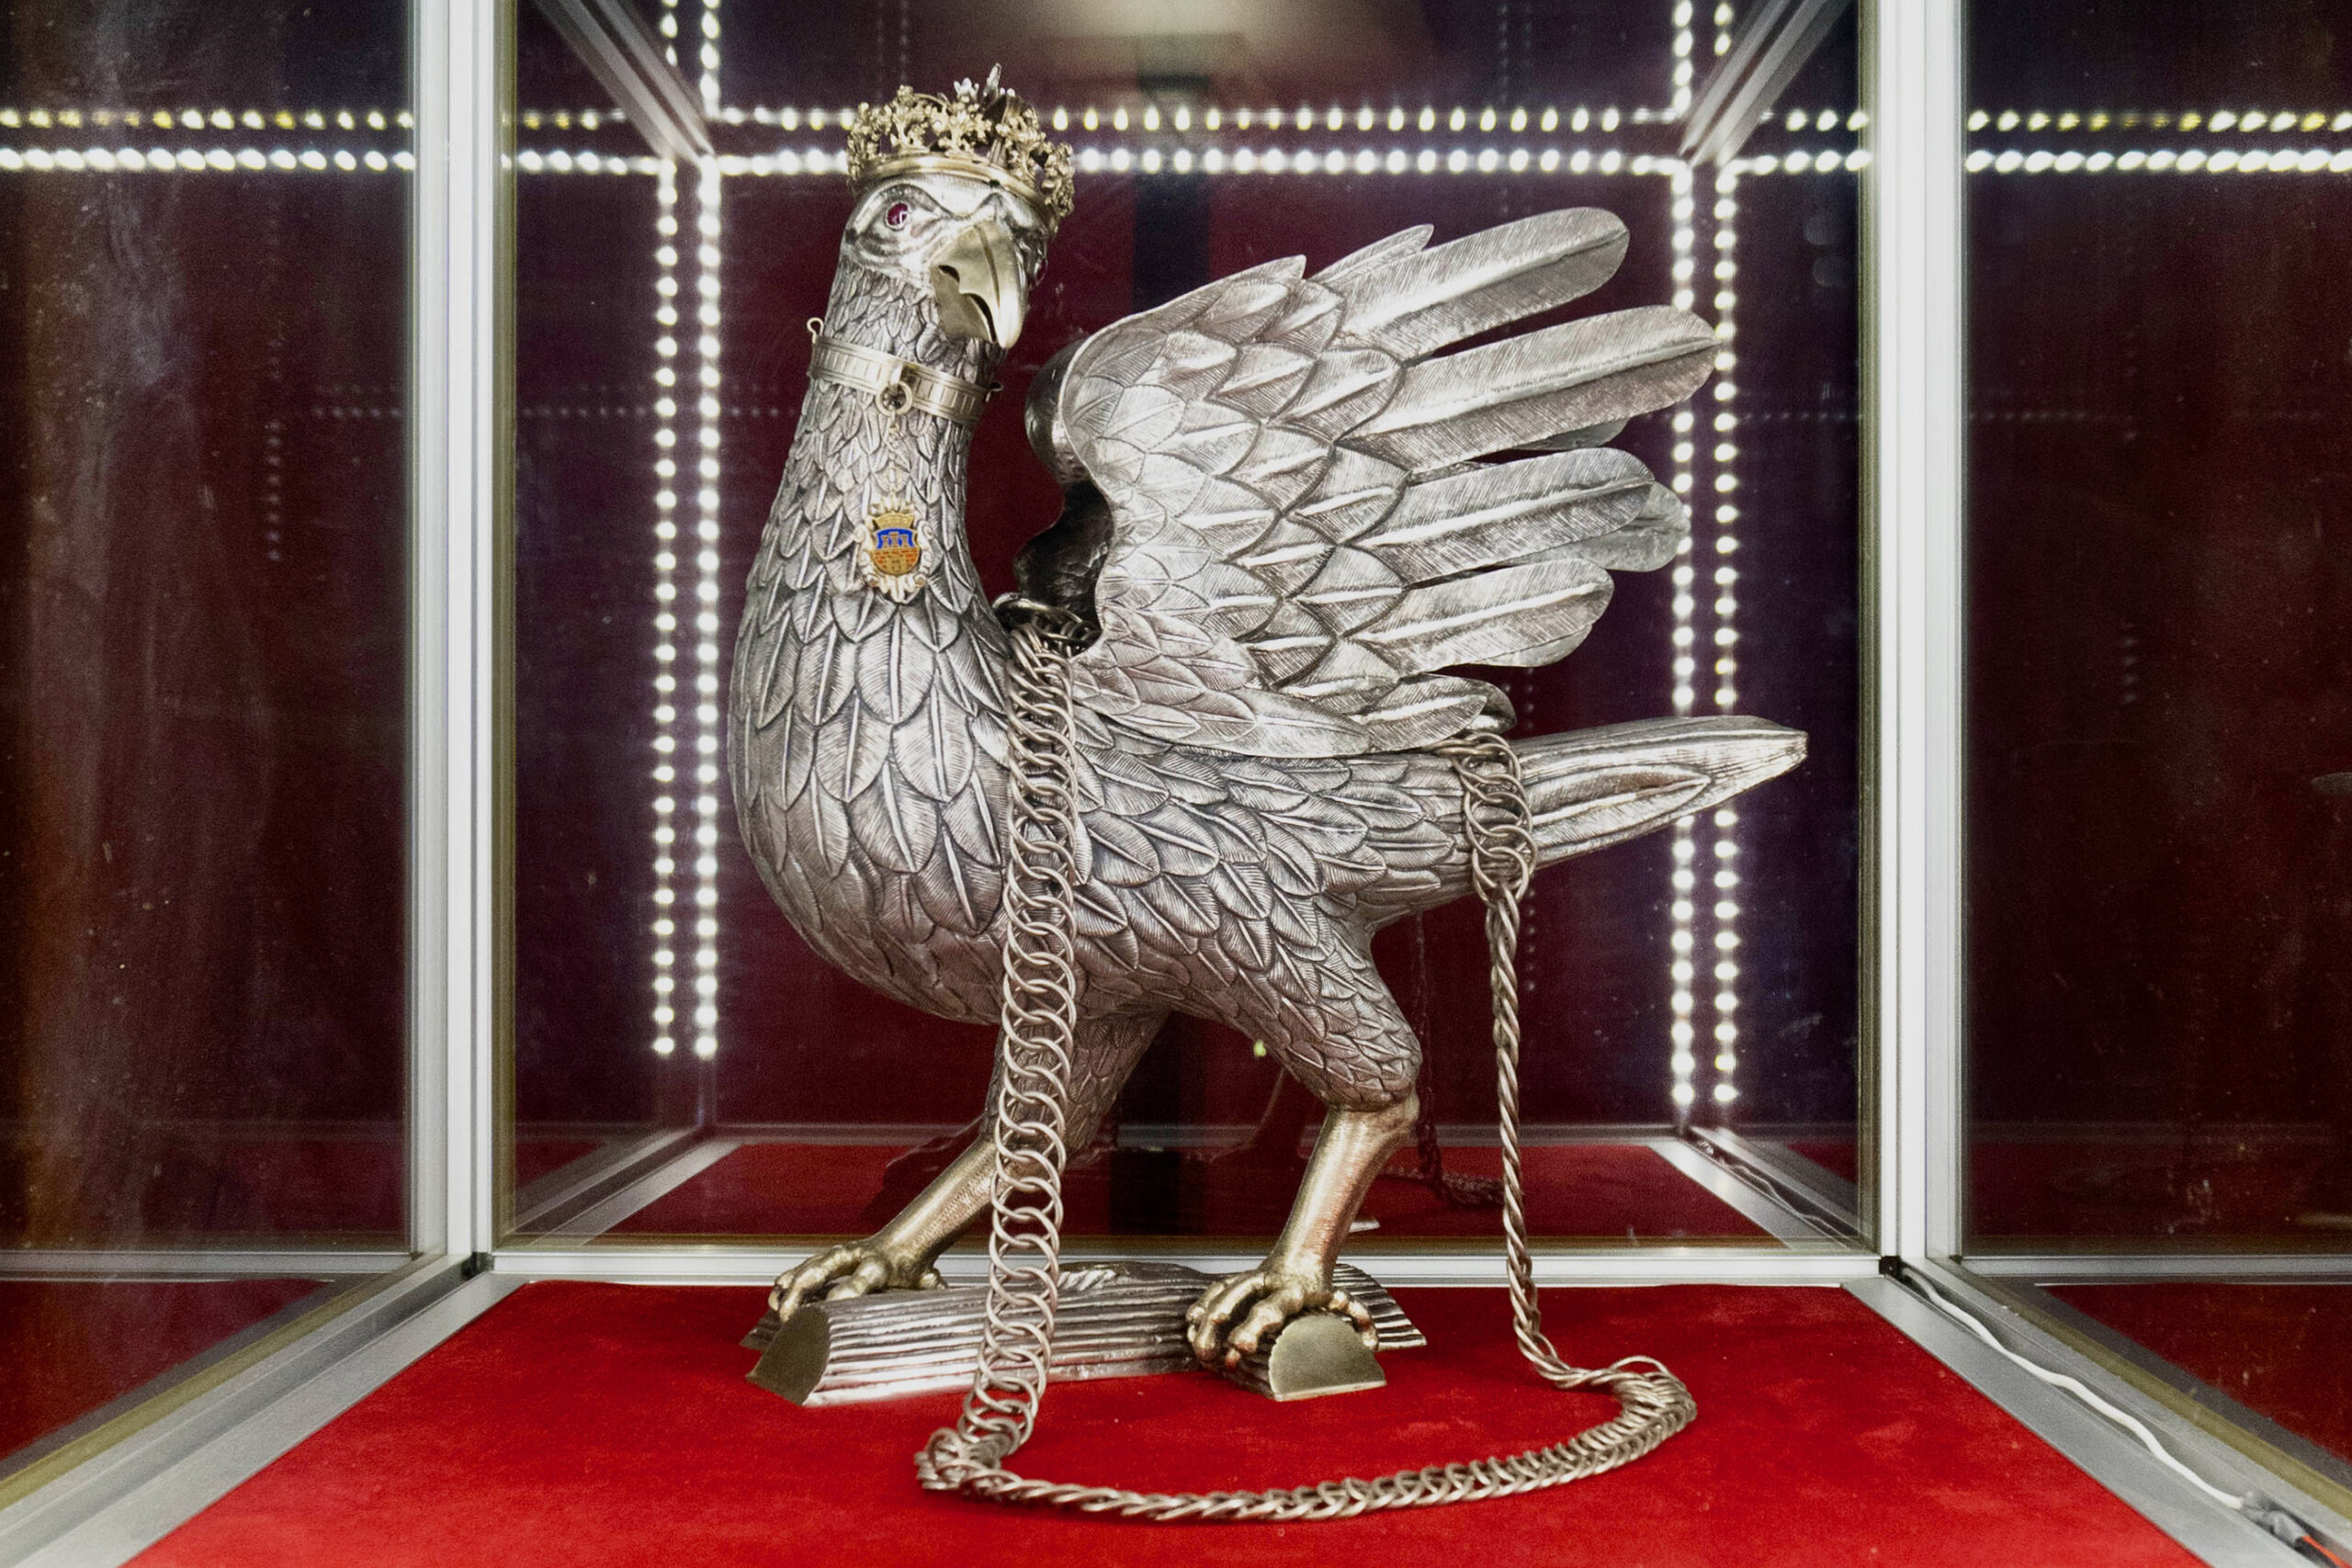 Srebrny Kur - the sacred silver chicken of Kraków